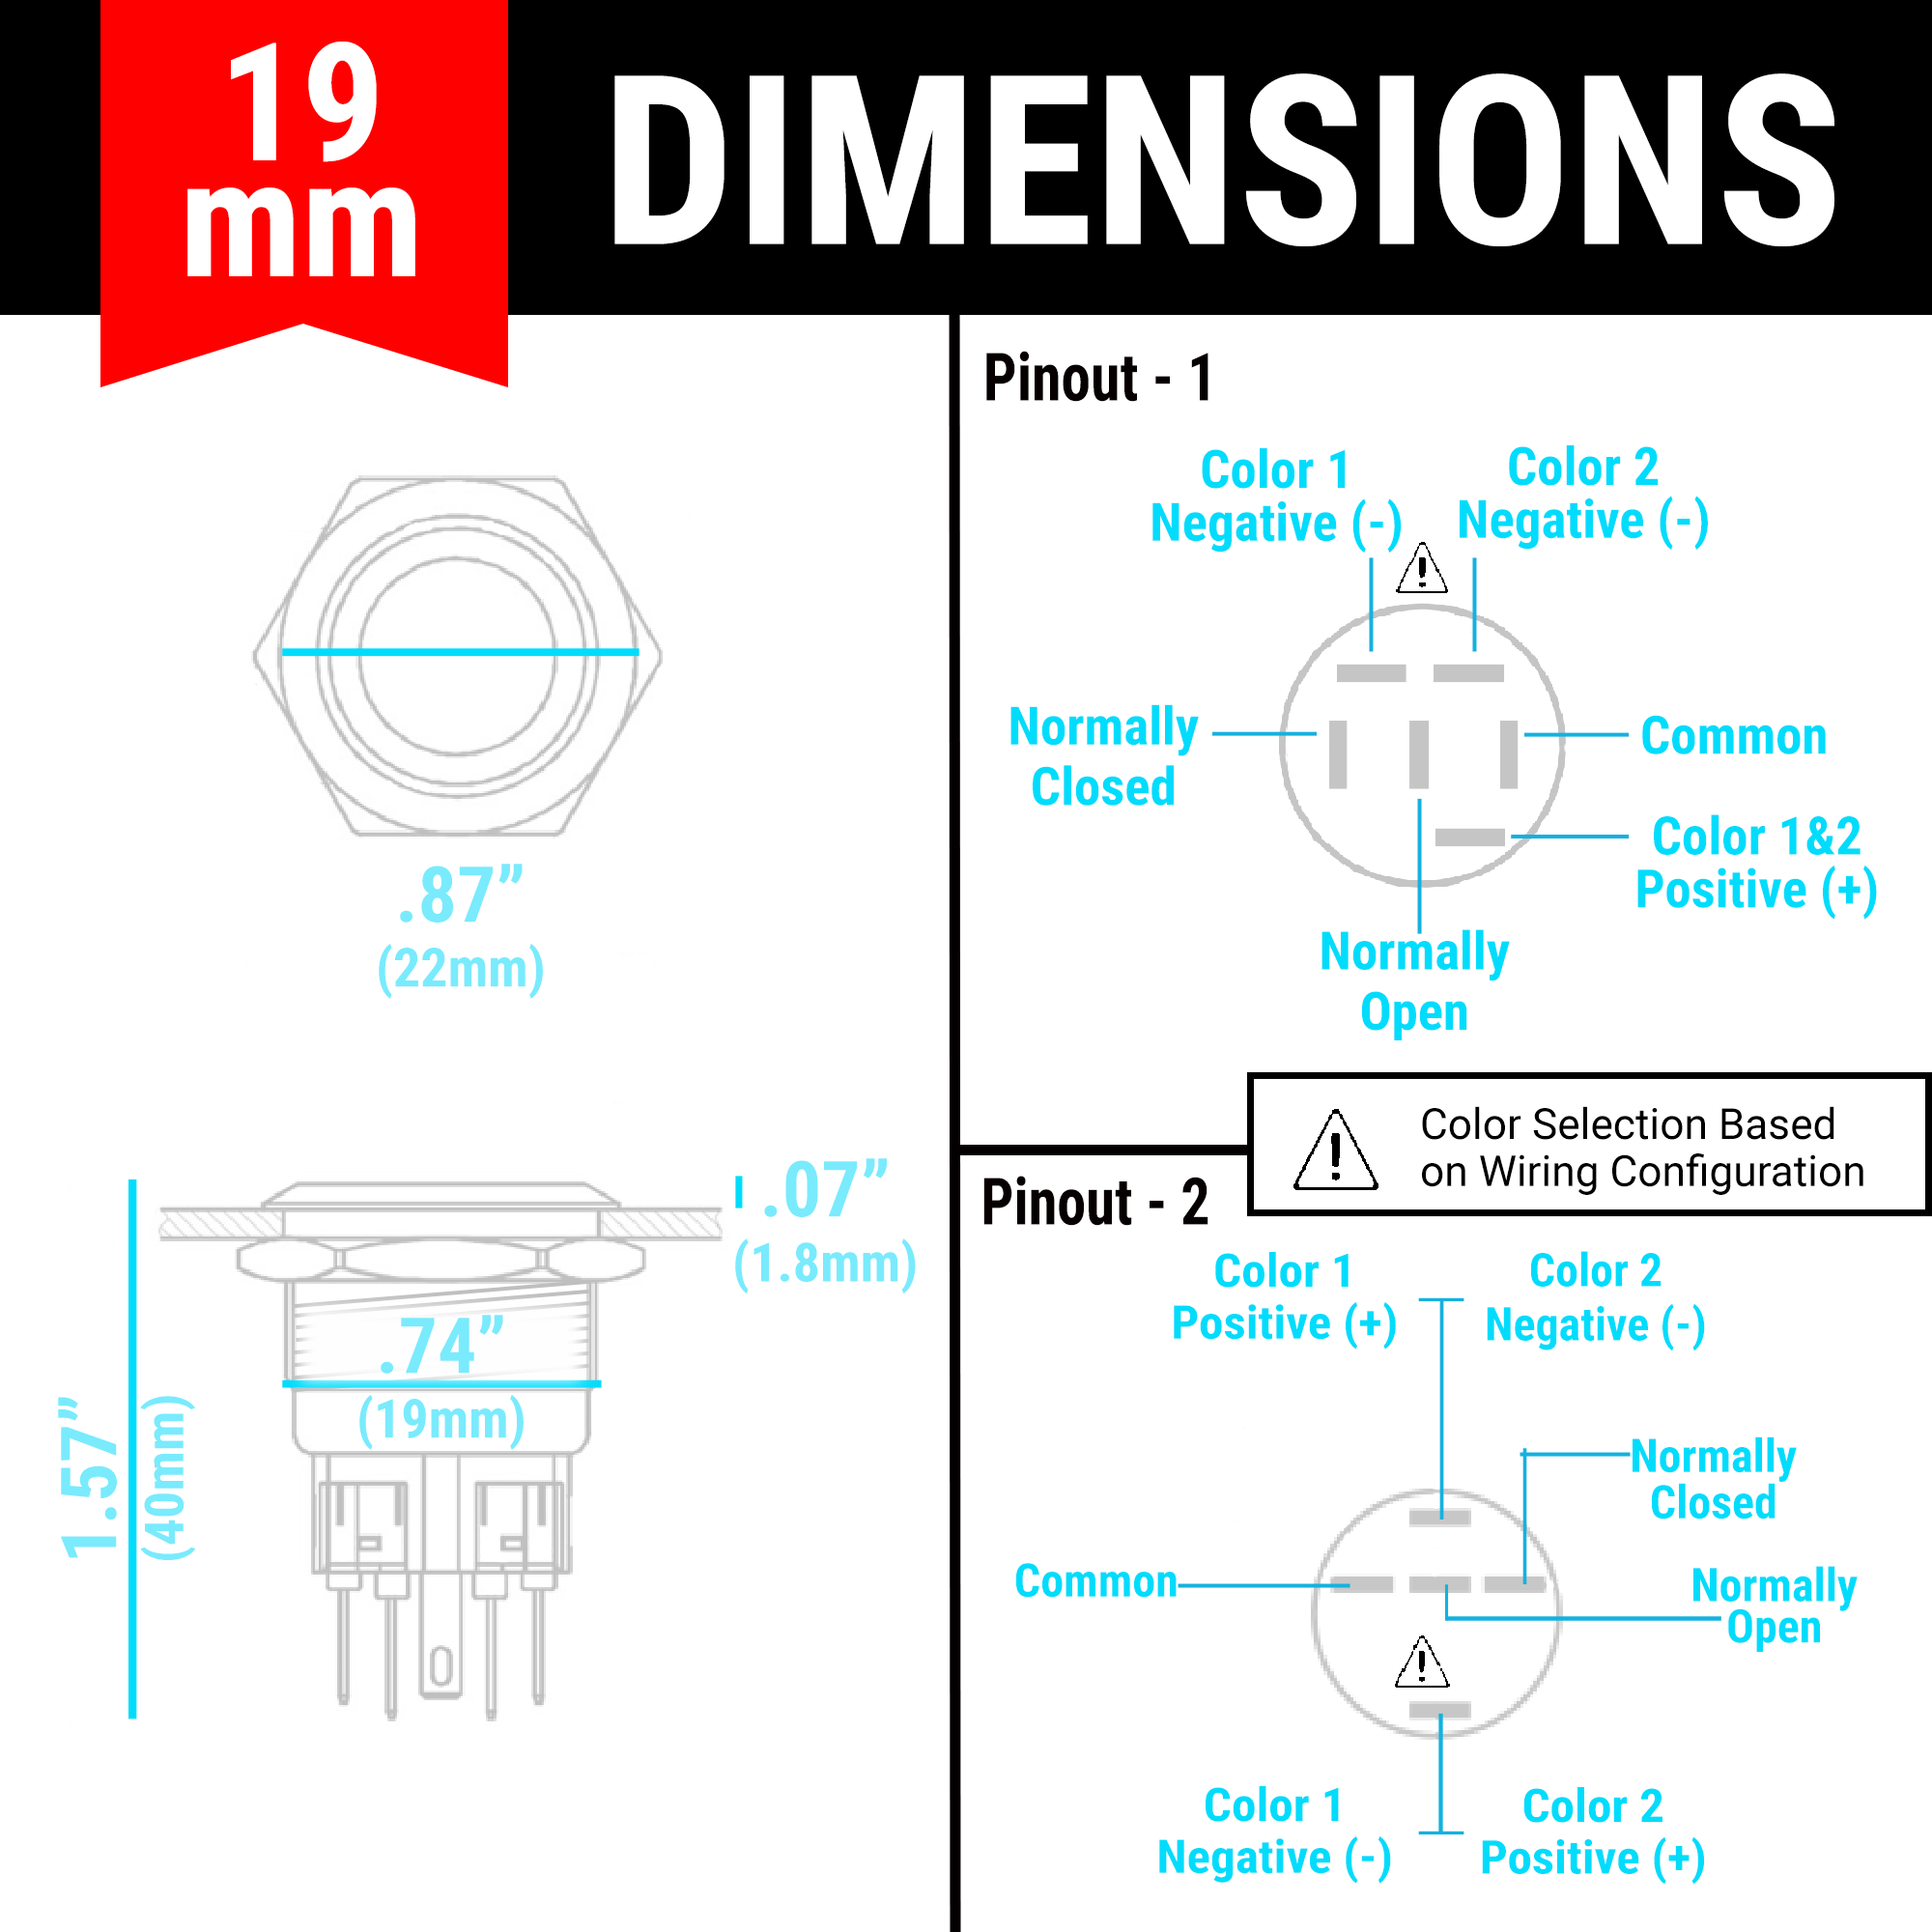 19mm Dimensions